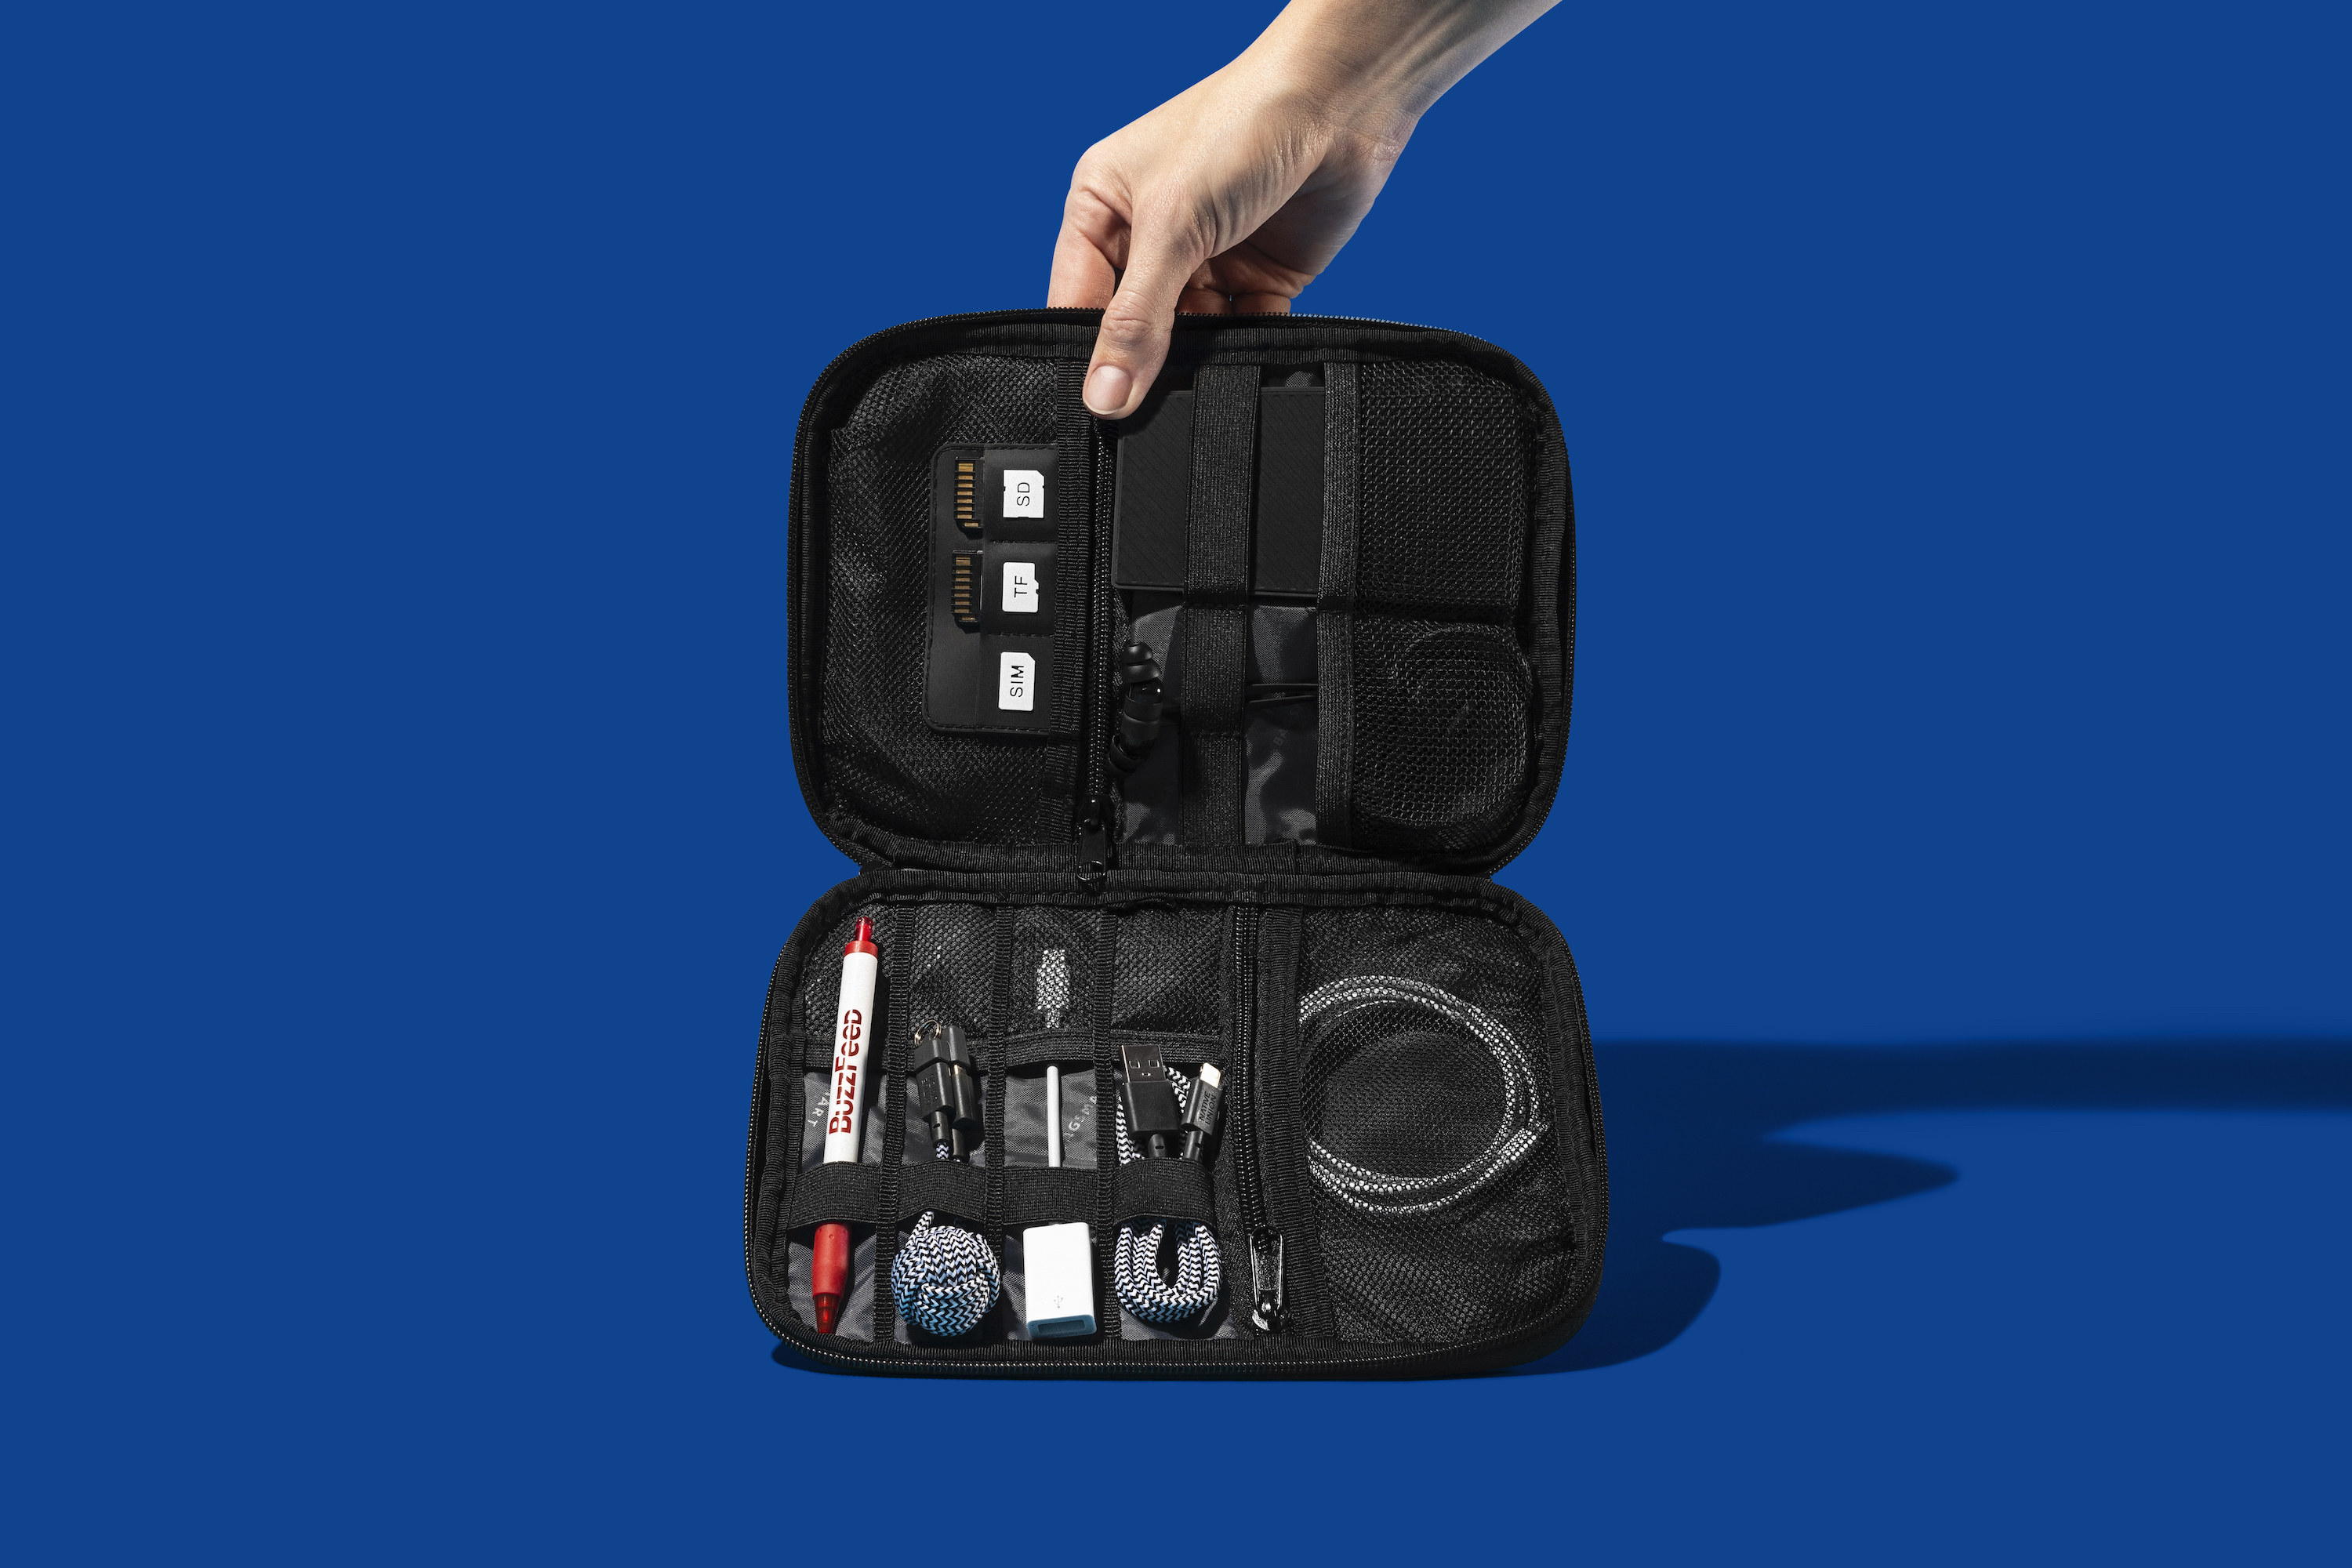 Hcfgs Travel Cable Organiser Bag Electronics Accessories Organizer Bag, 